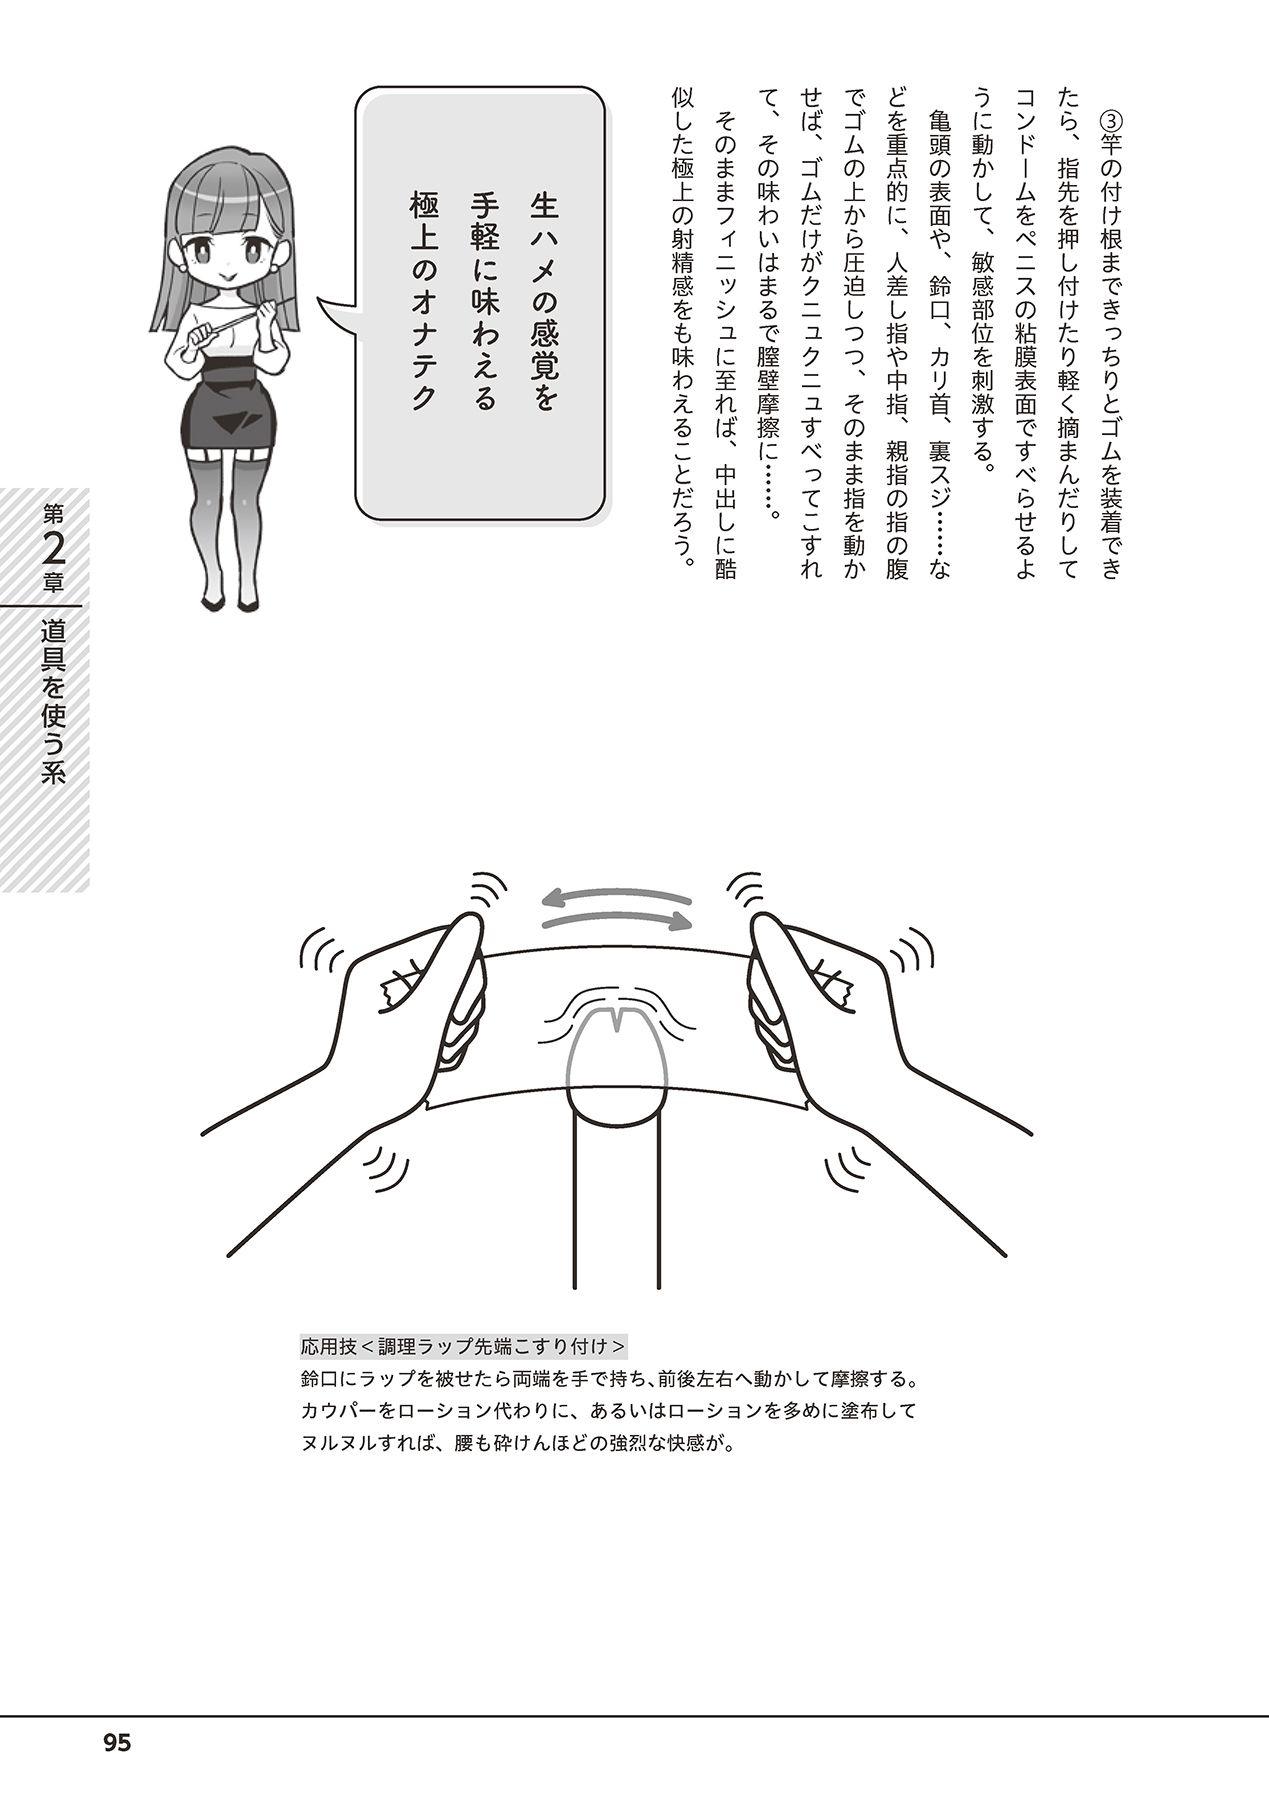 Otoko no Jii Onanie Kanzen Manual Illustration Han...... Onanie Play 97